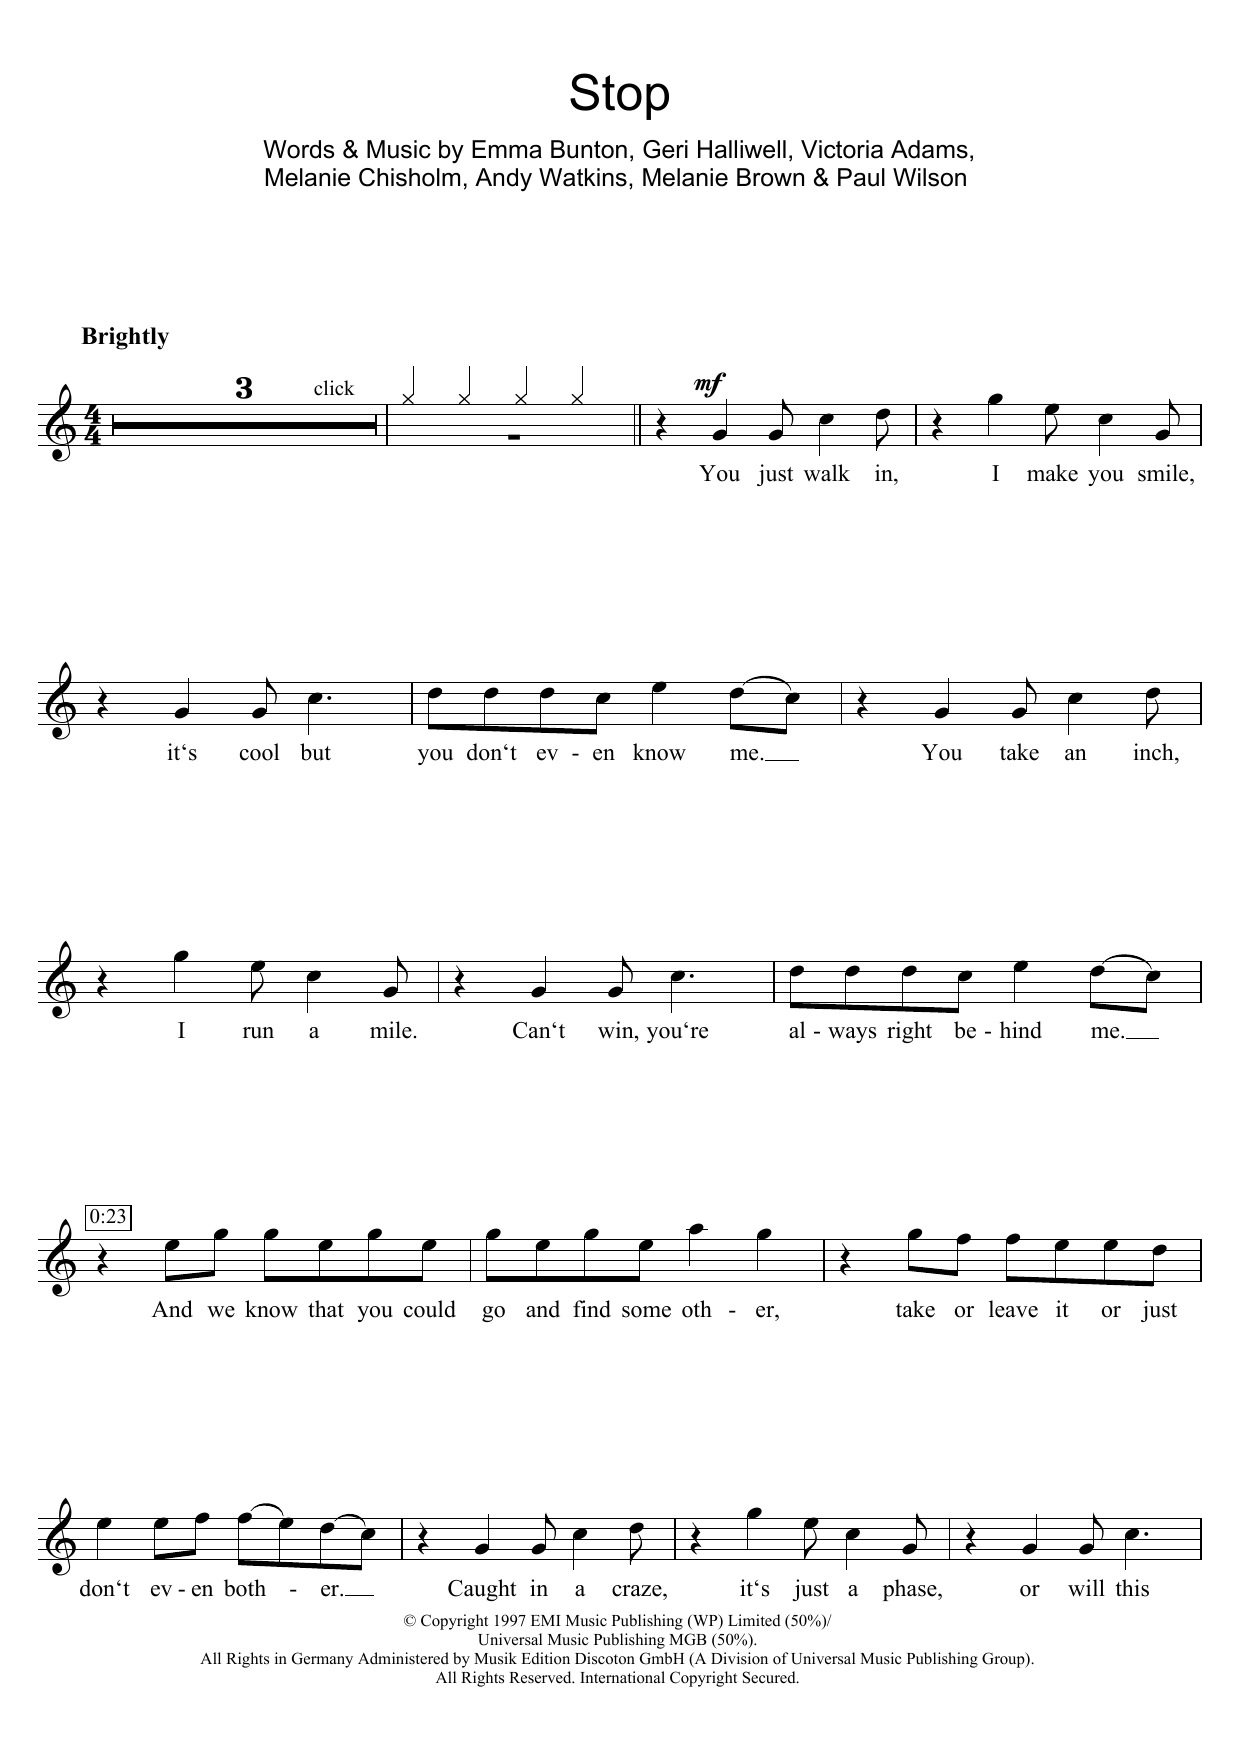 Spice Girls Stop Sheet Music Notes & Chords for Guitar Chords/Lyrics - Download or Print PDF